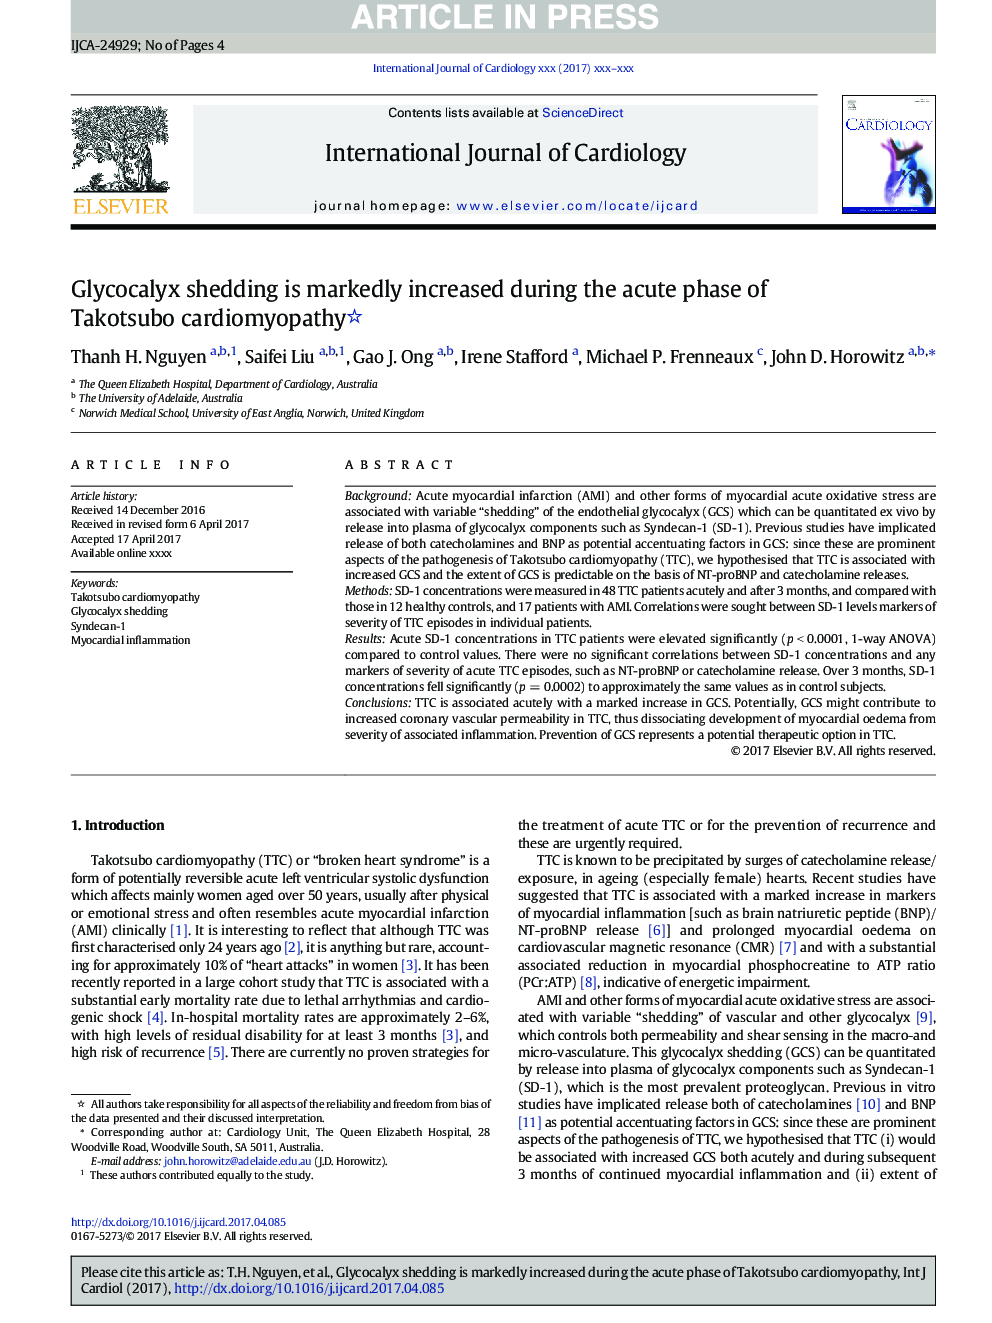 Glycocalyx shedding is markedly increased during the acute phase of Takotsubo cardiomyopathy